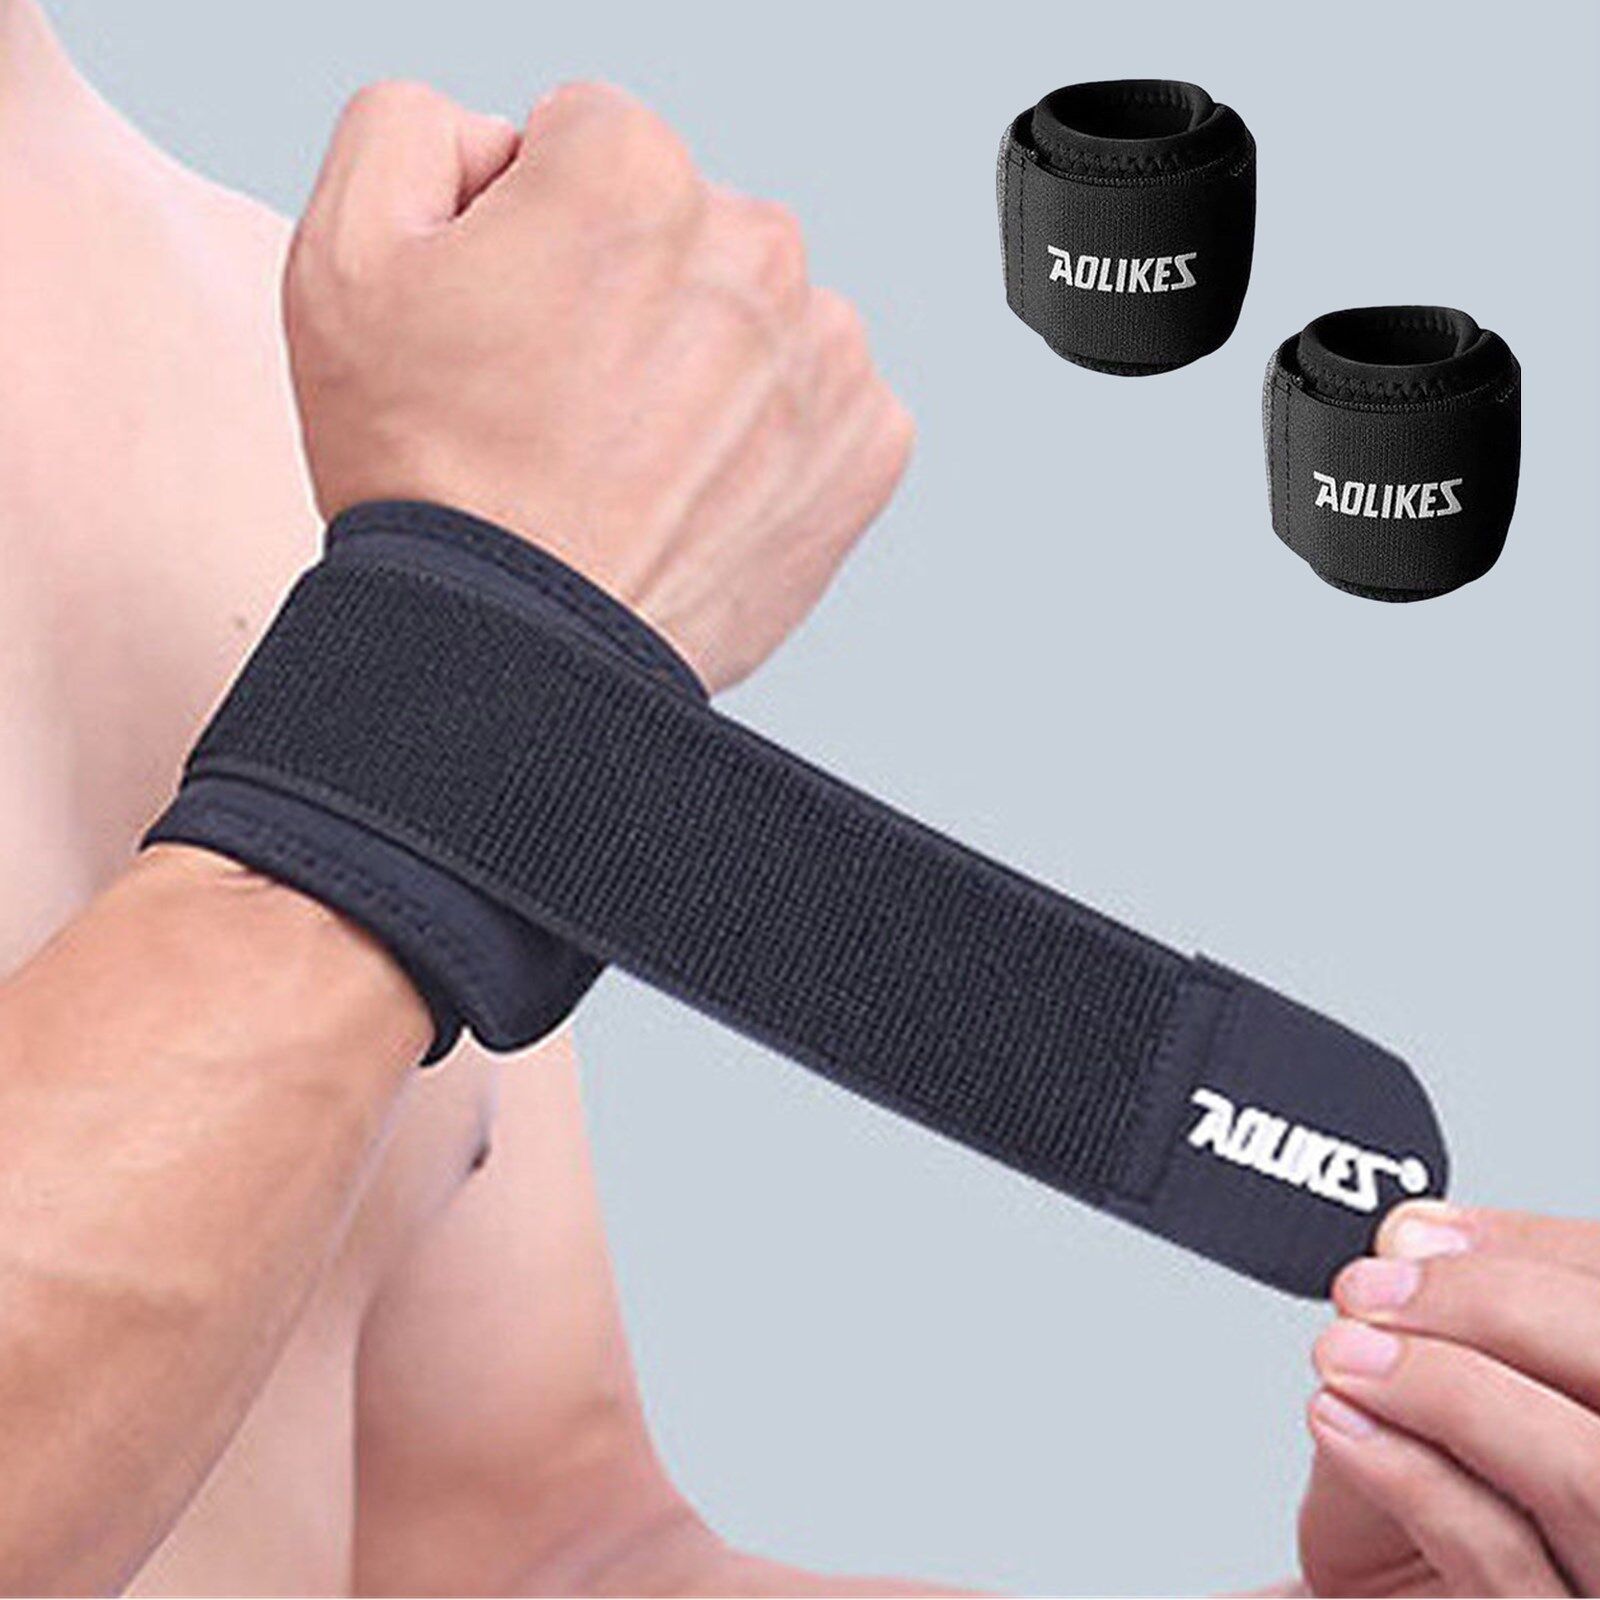 Sports Wrist Band Brace Wrap Adjustable Support Gym Strap Carpal Tunnel Bandage Aolikes Does Not Apply - фотография #3